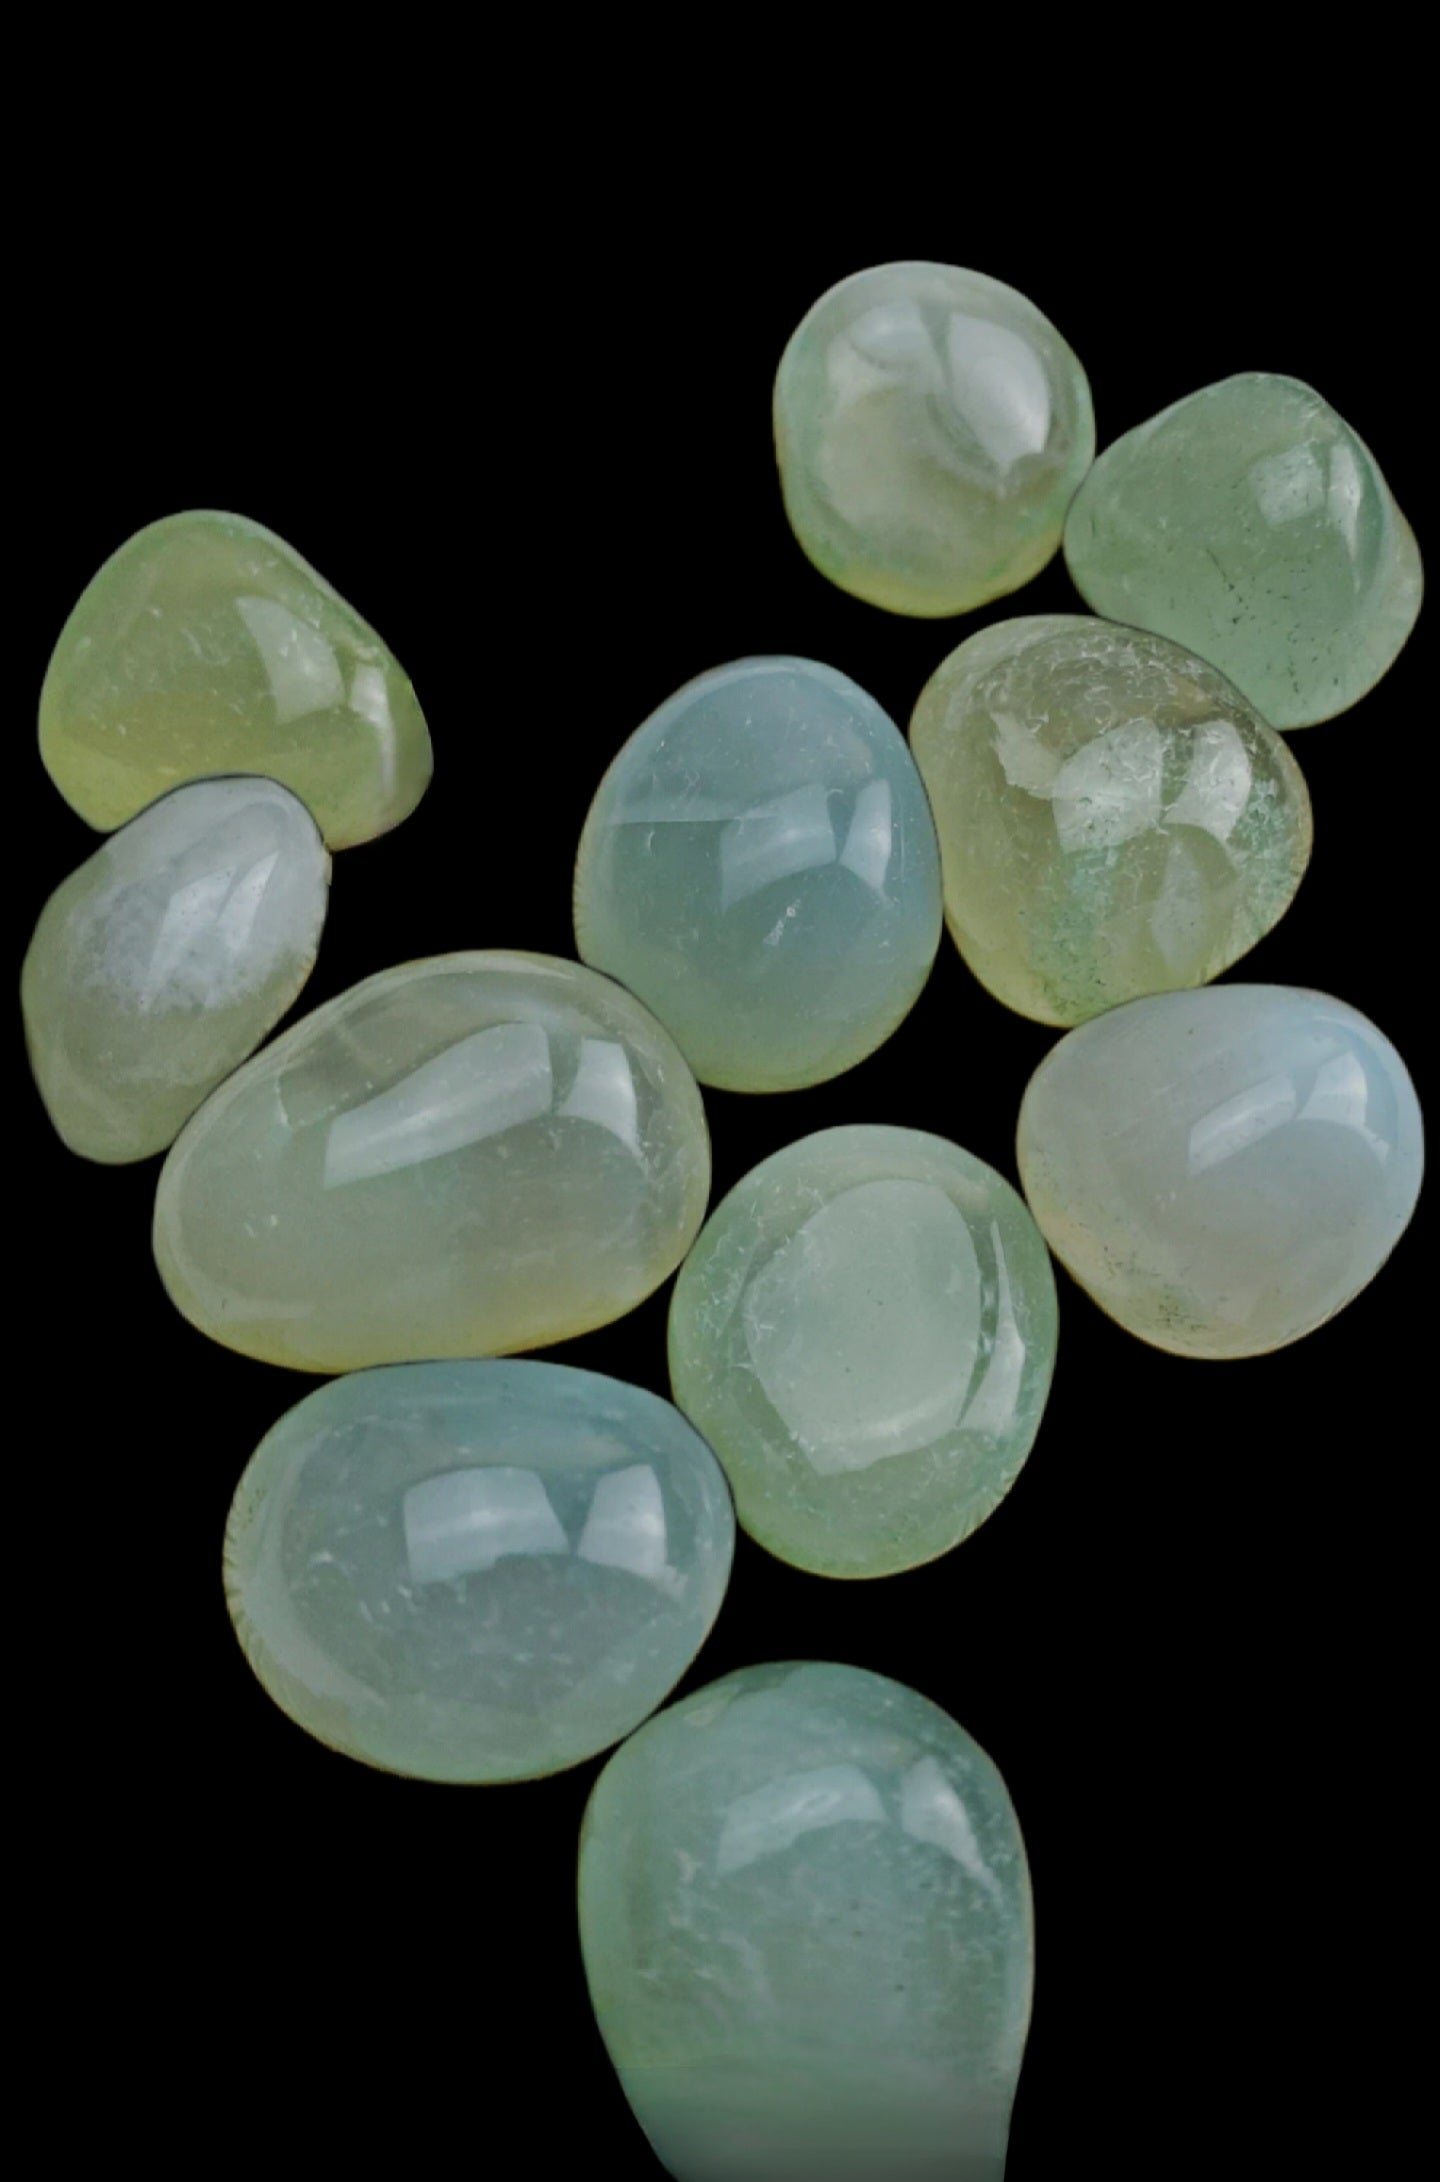 Aqua Chalcedony Pocket Stone Tumble - Polished and Tumbled Crystal